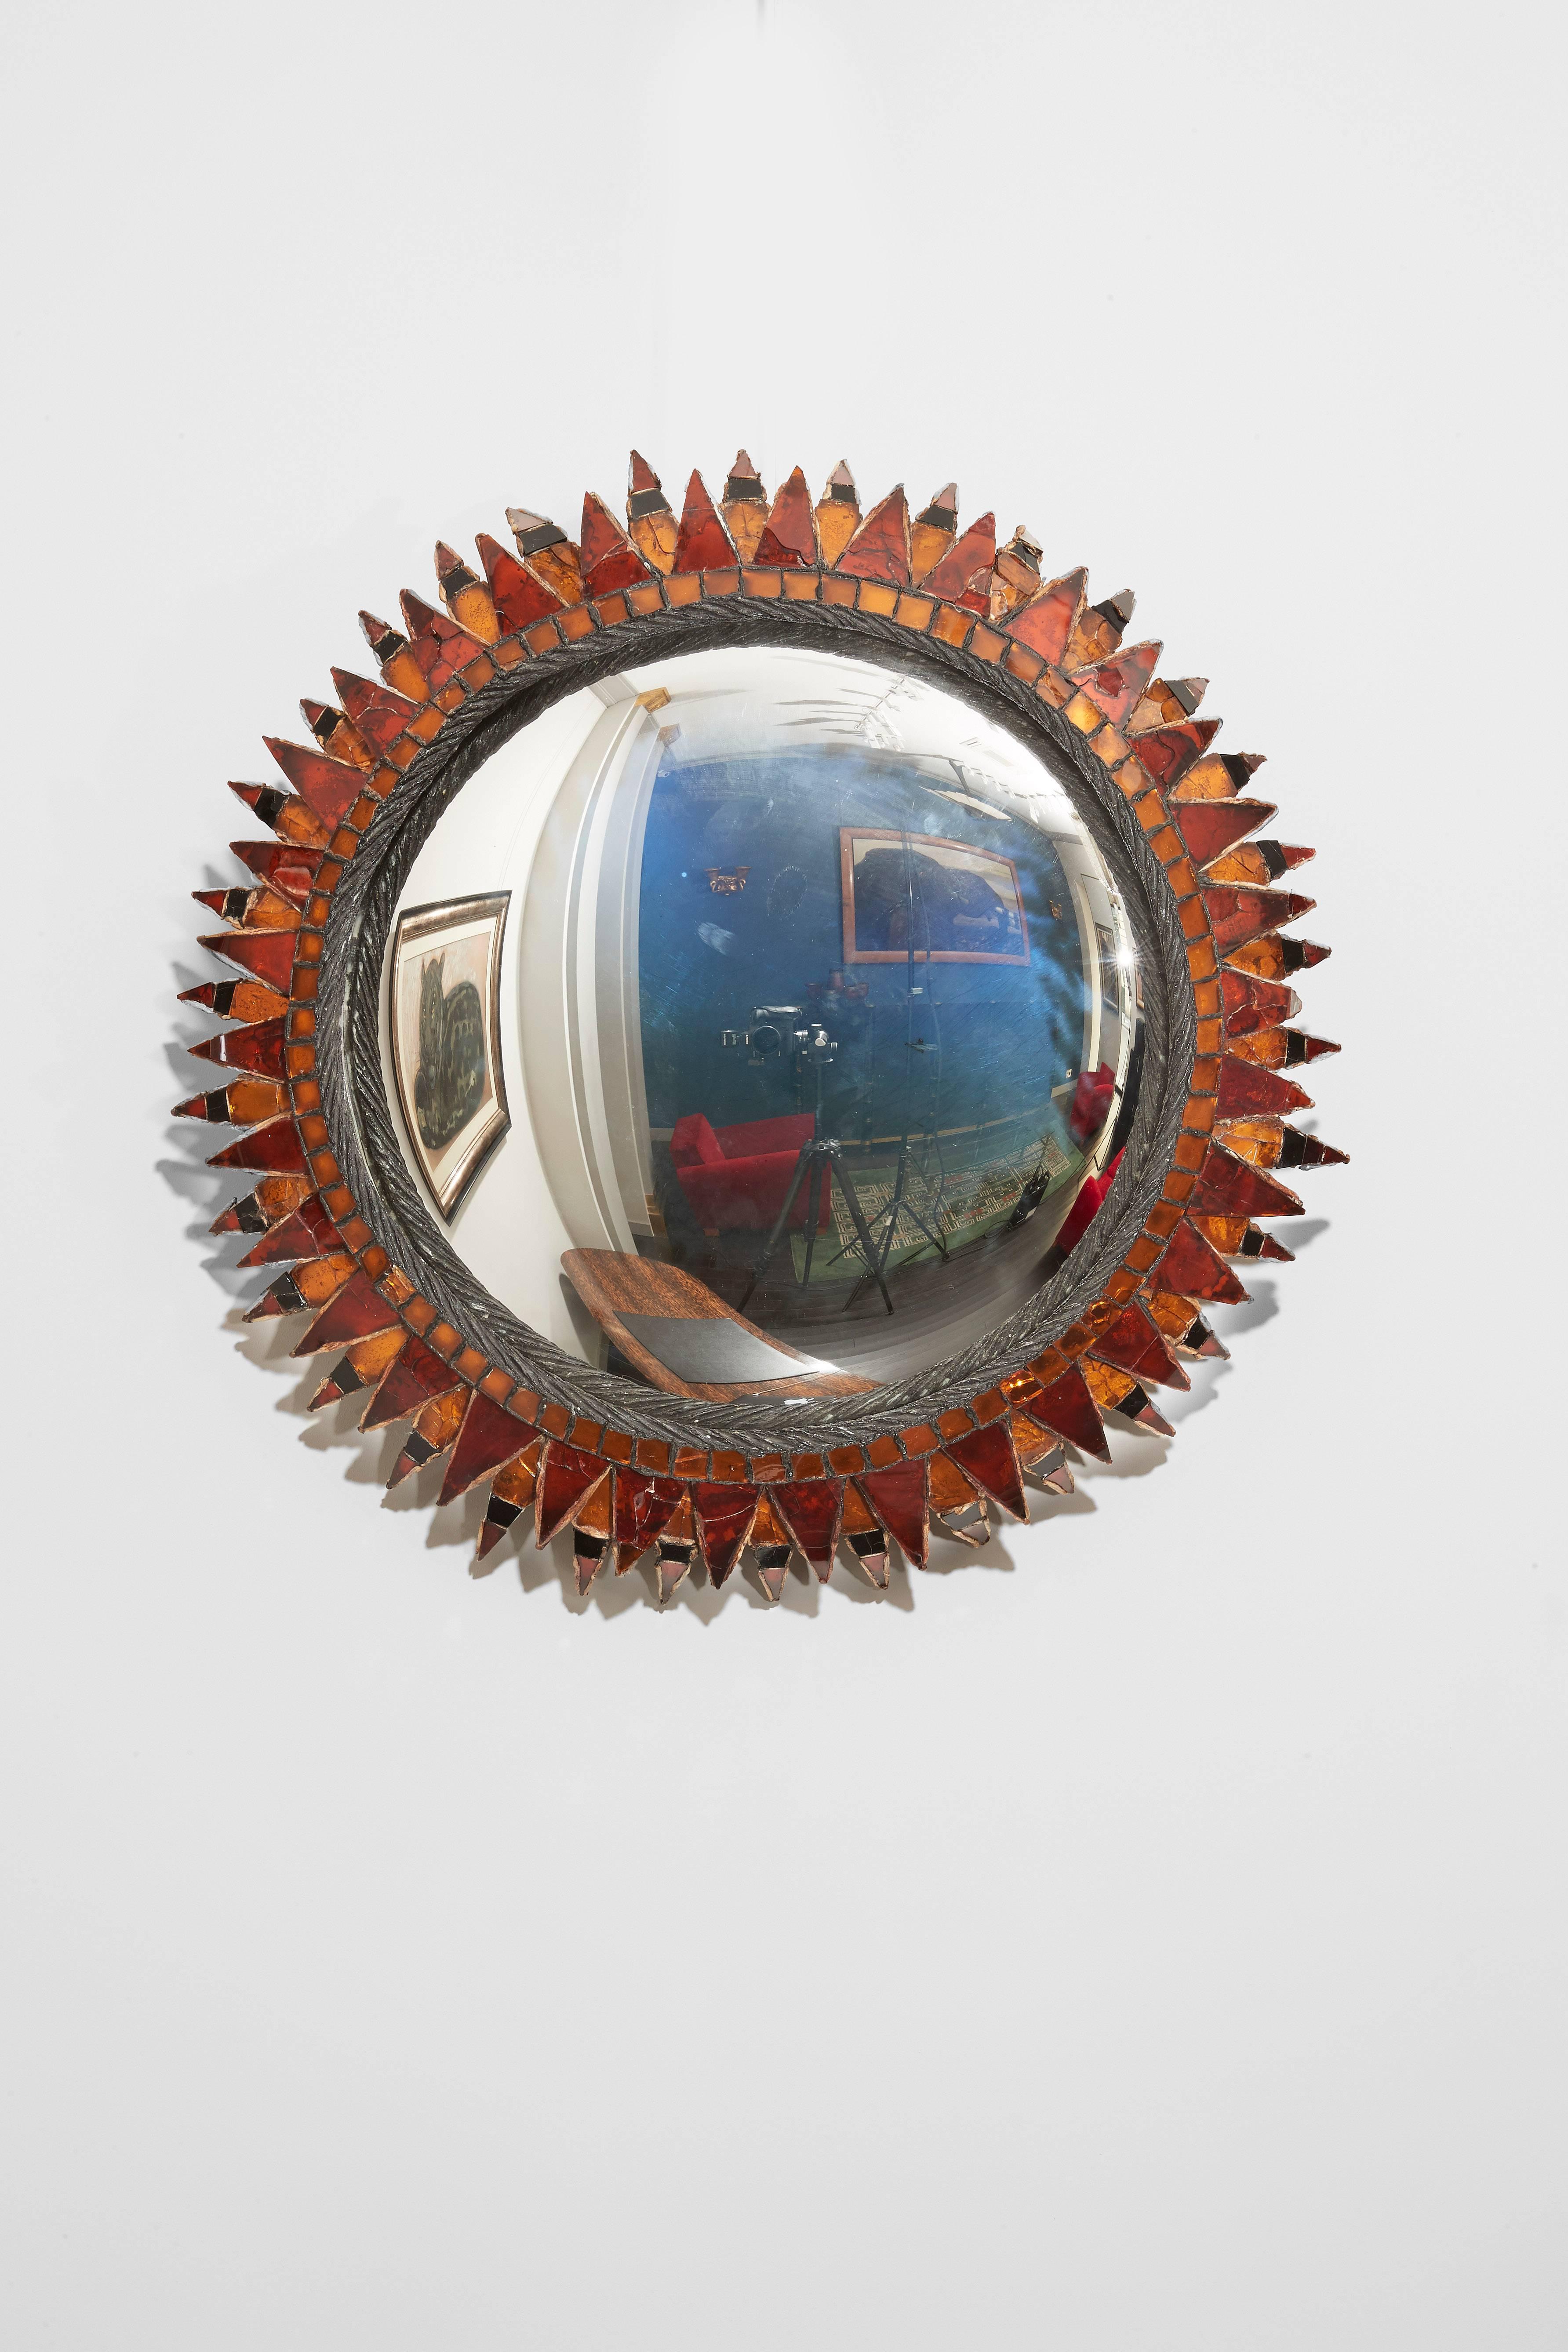 A Circular convex mirror in talosel and orange, black and red mirror.